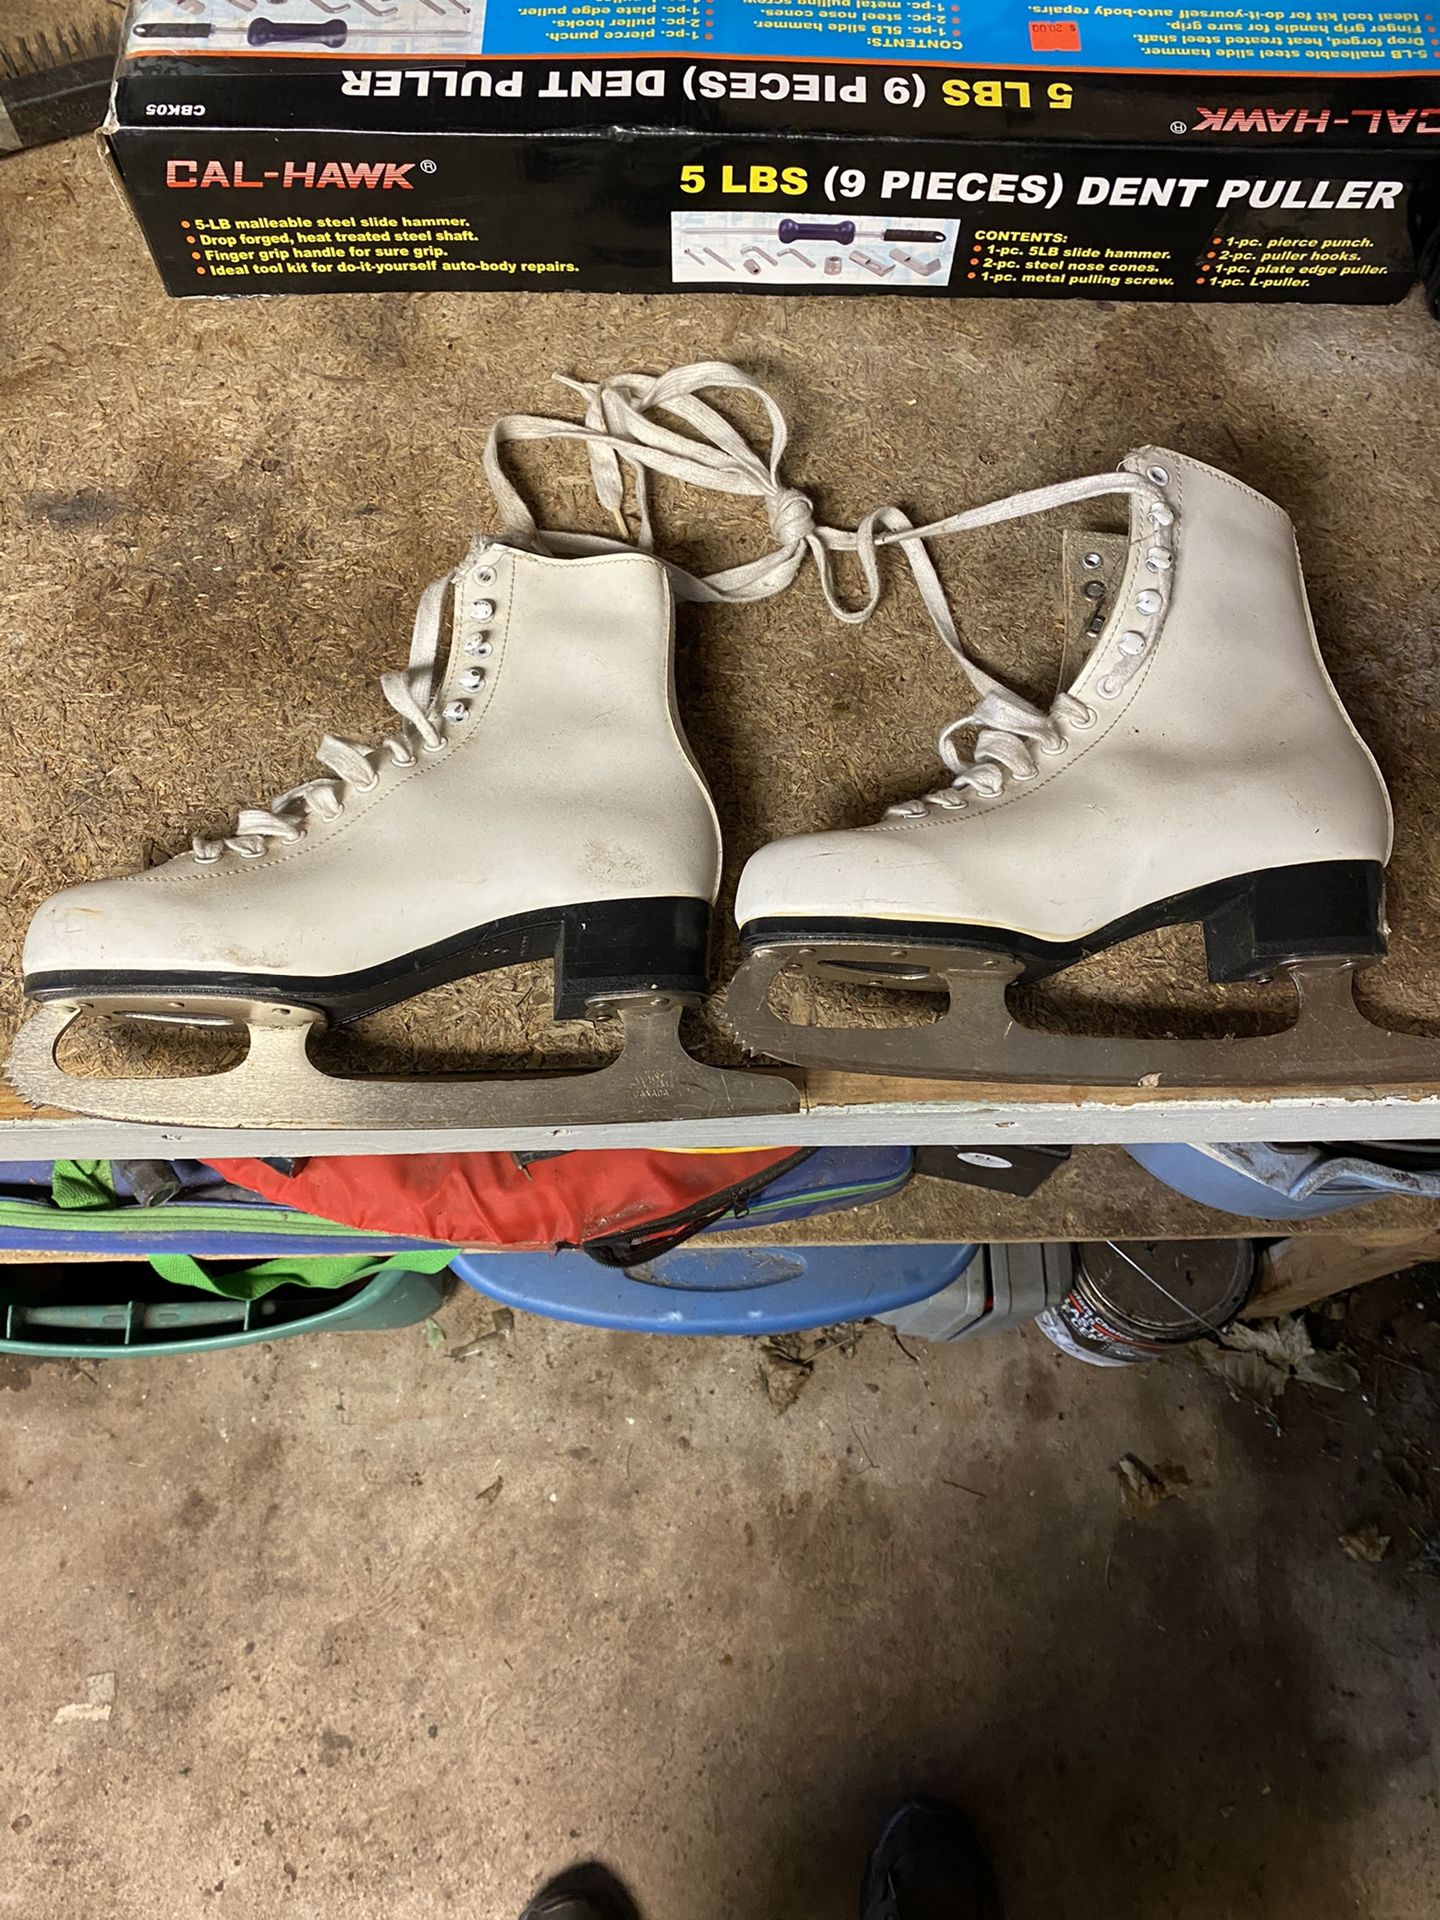 Ice skates